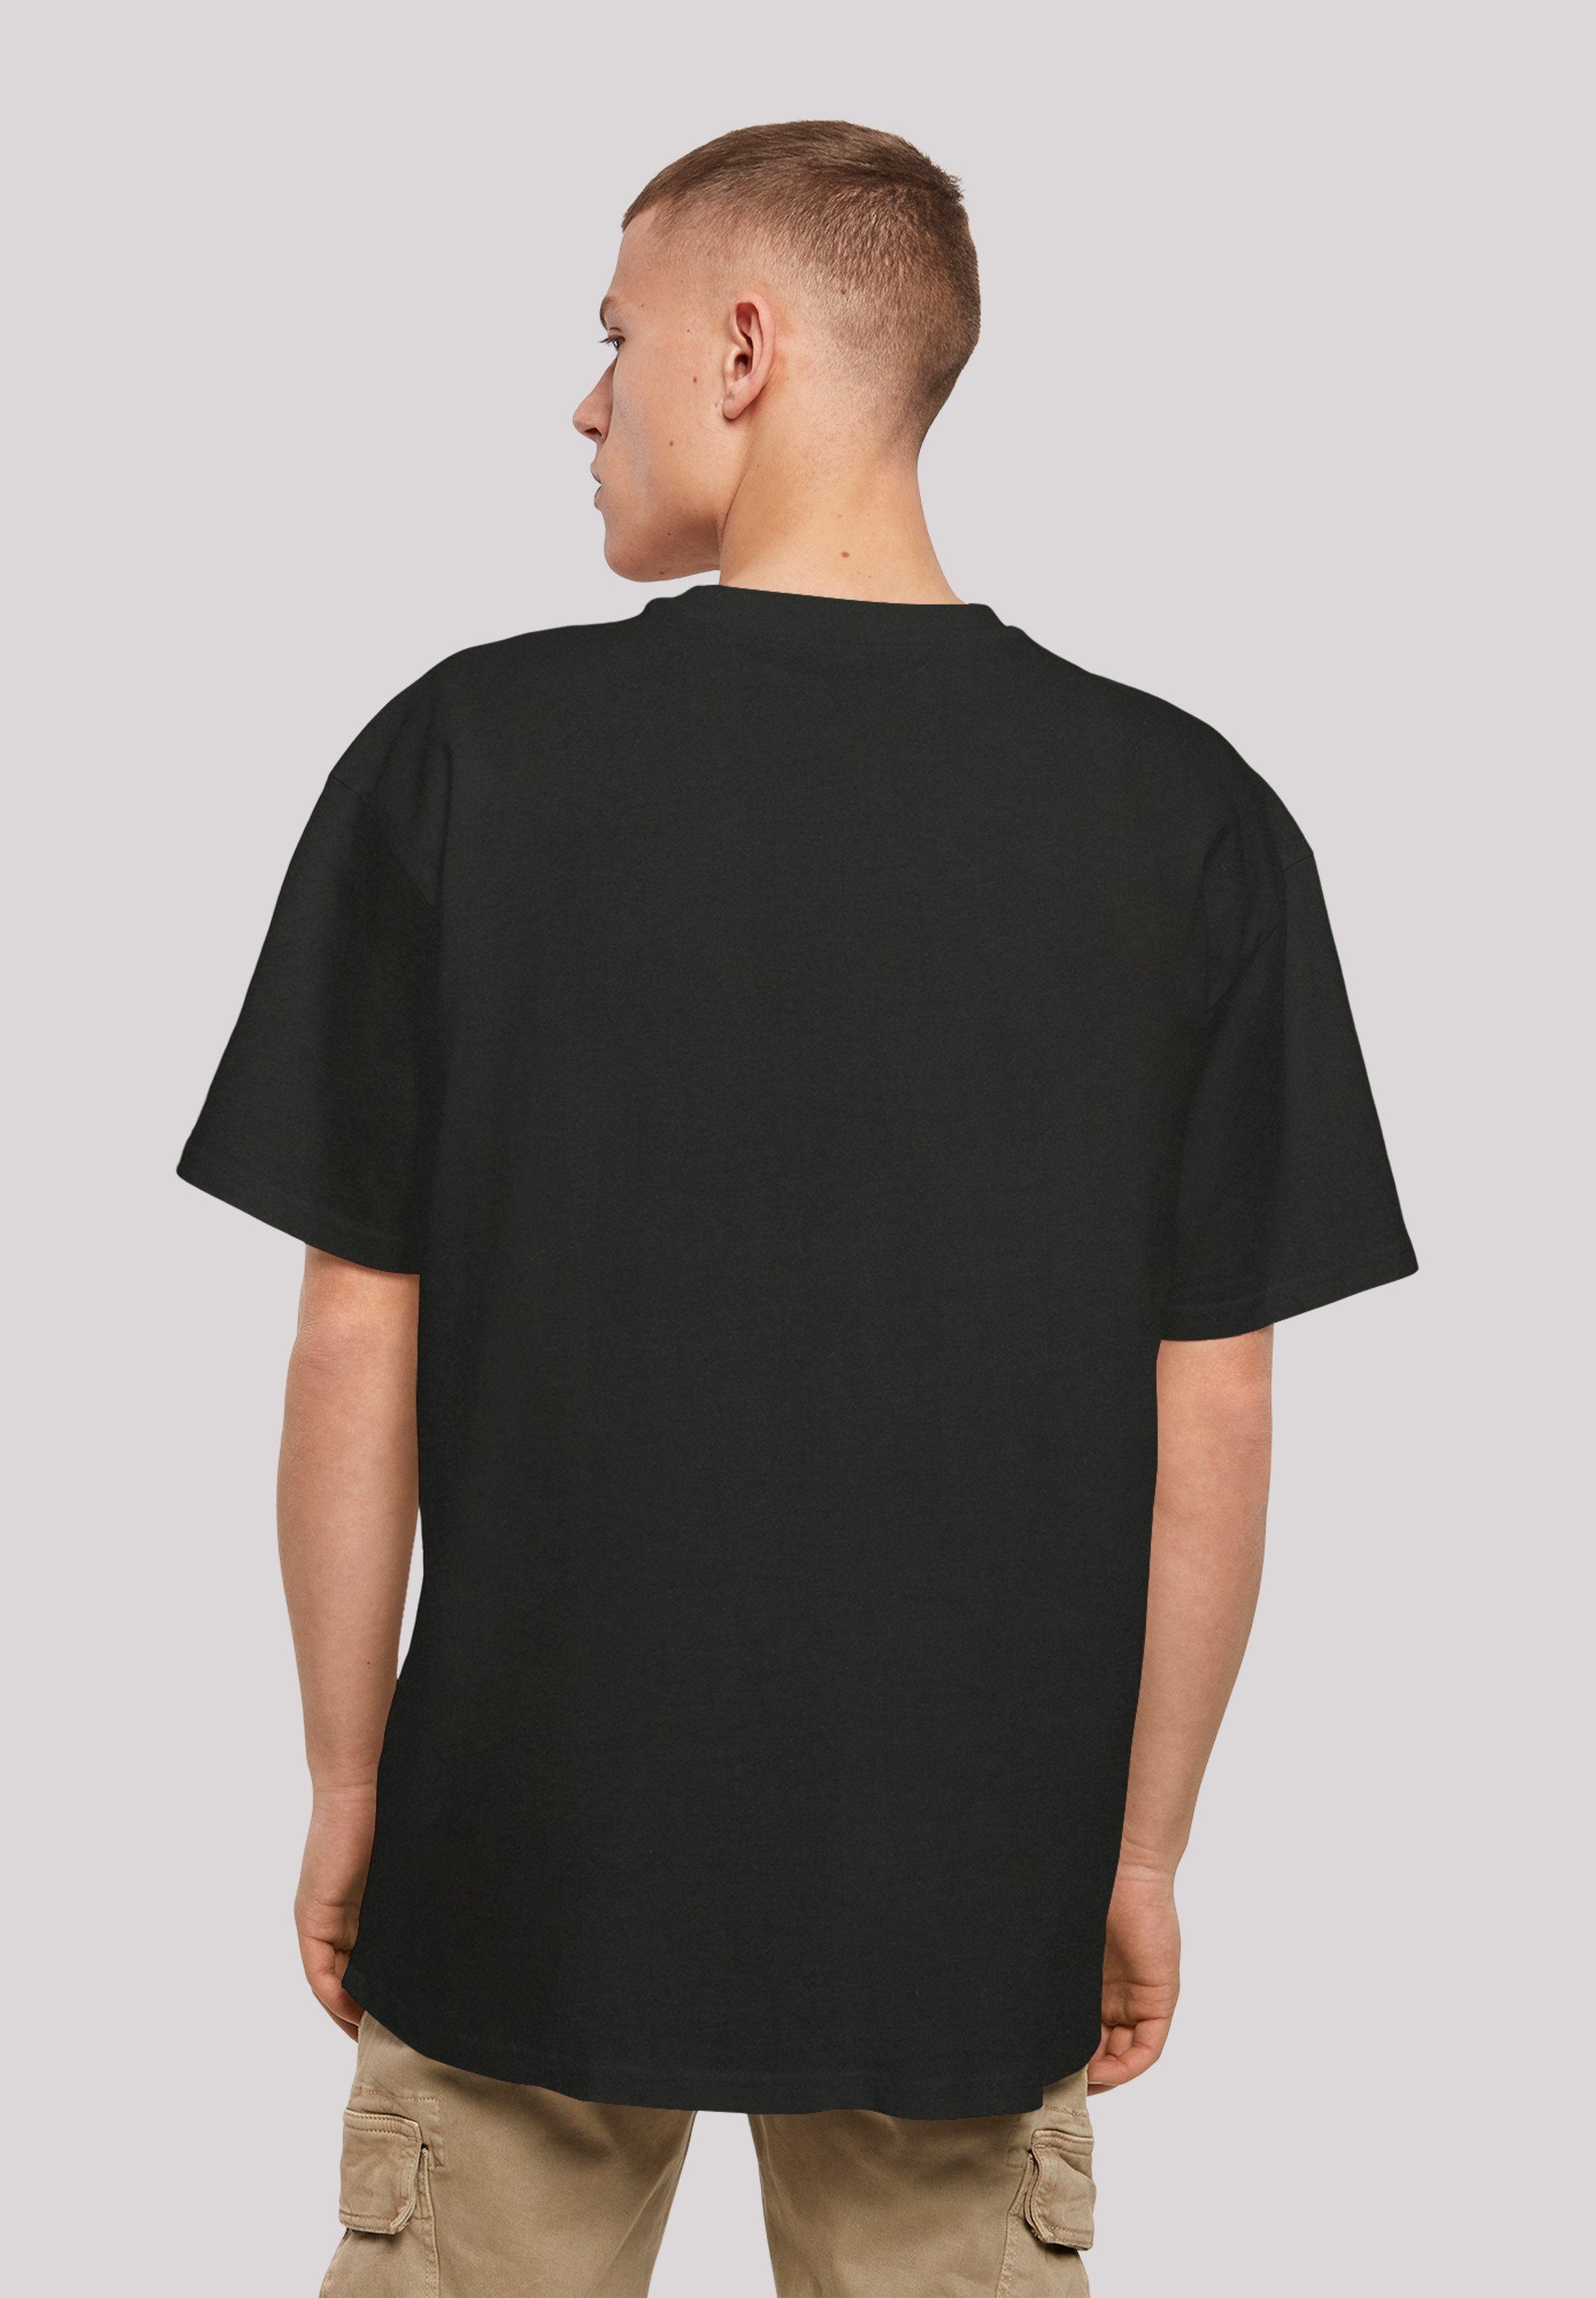 TEE F4NT4STIC OVERSIZE SELF CARE Print schwarz T-Shirt